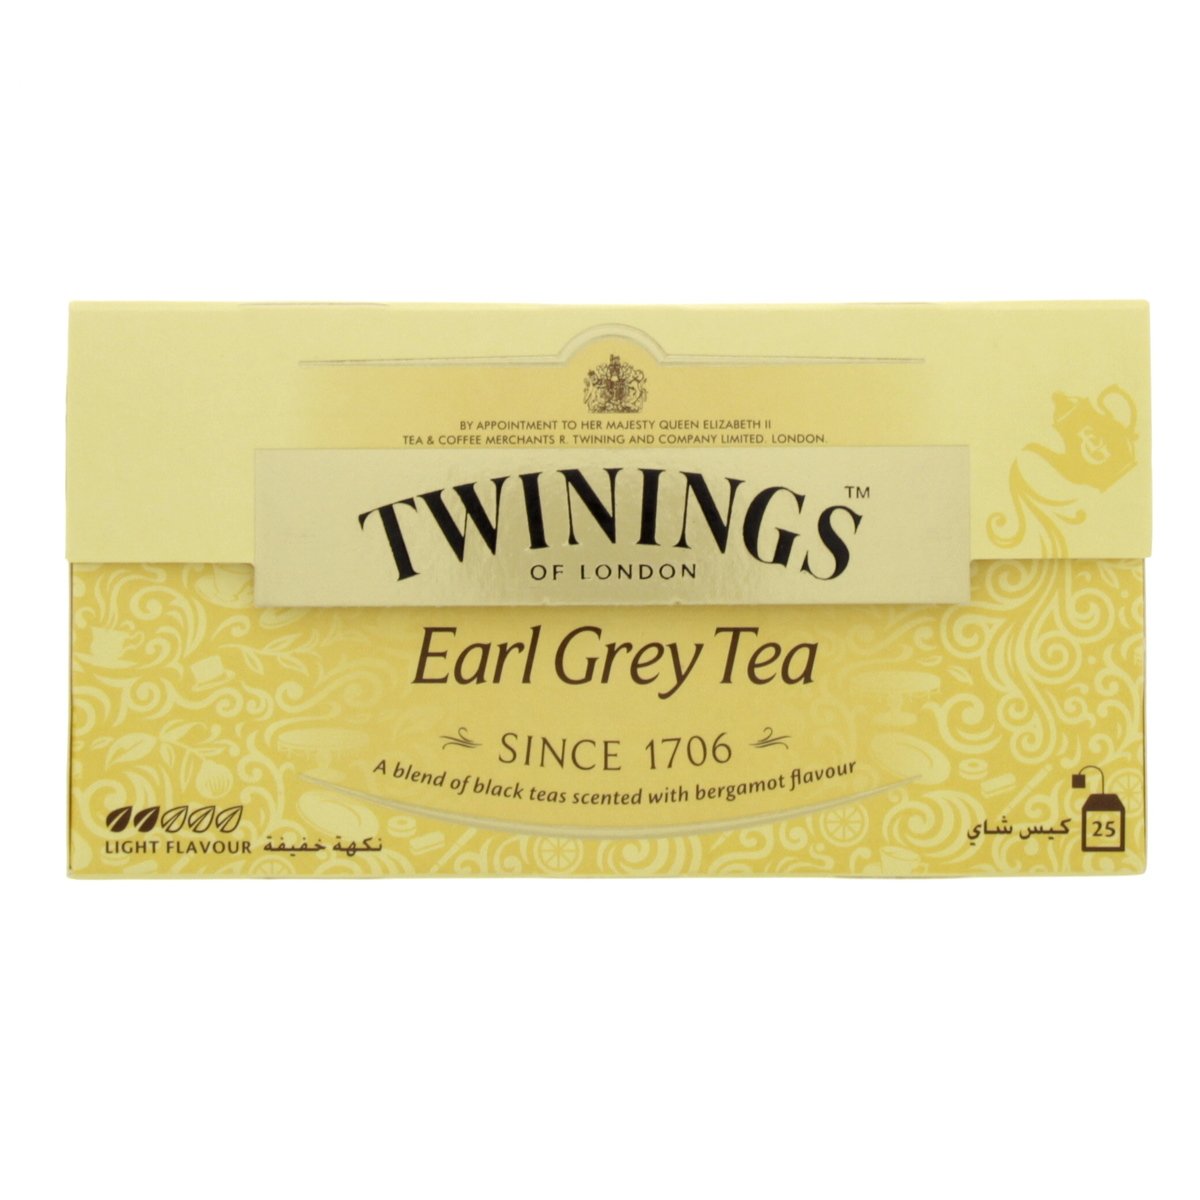 TWININGS Vanilla Tea 25 Tea Bags, 50g Black Tea Bags Box Price in